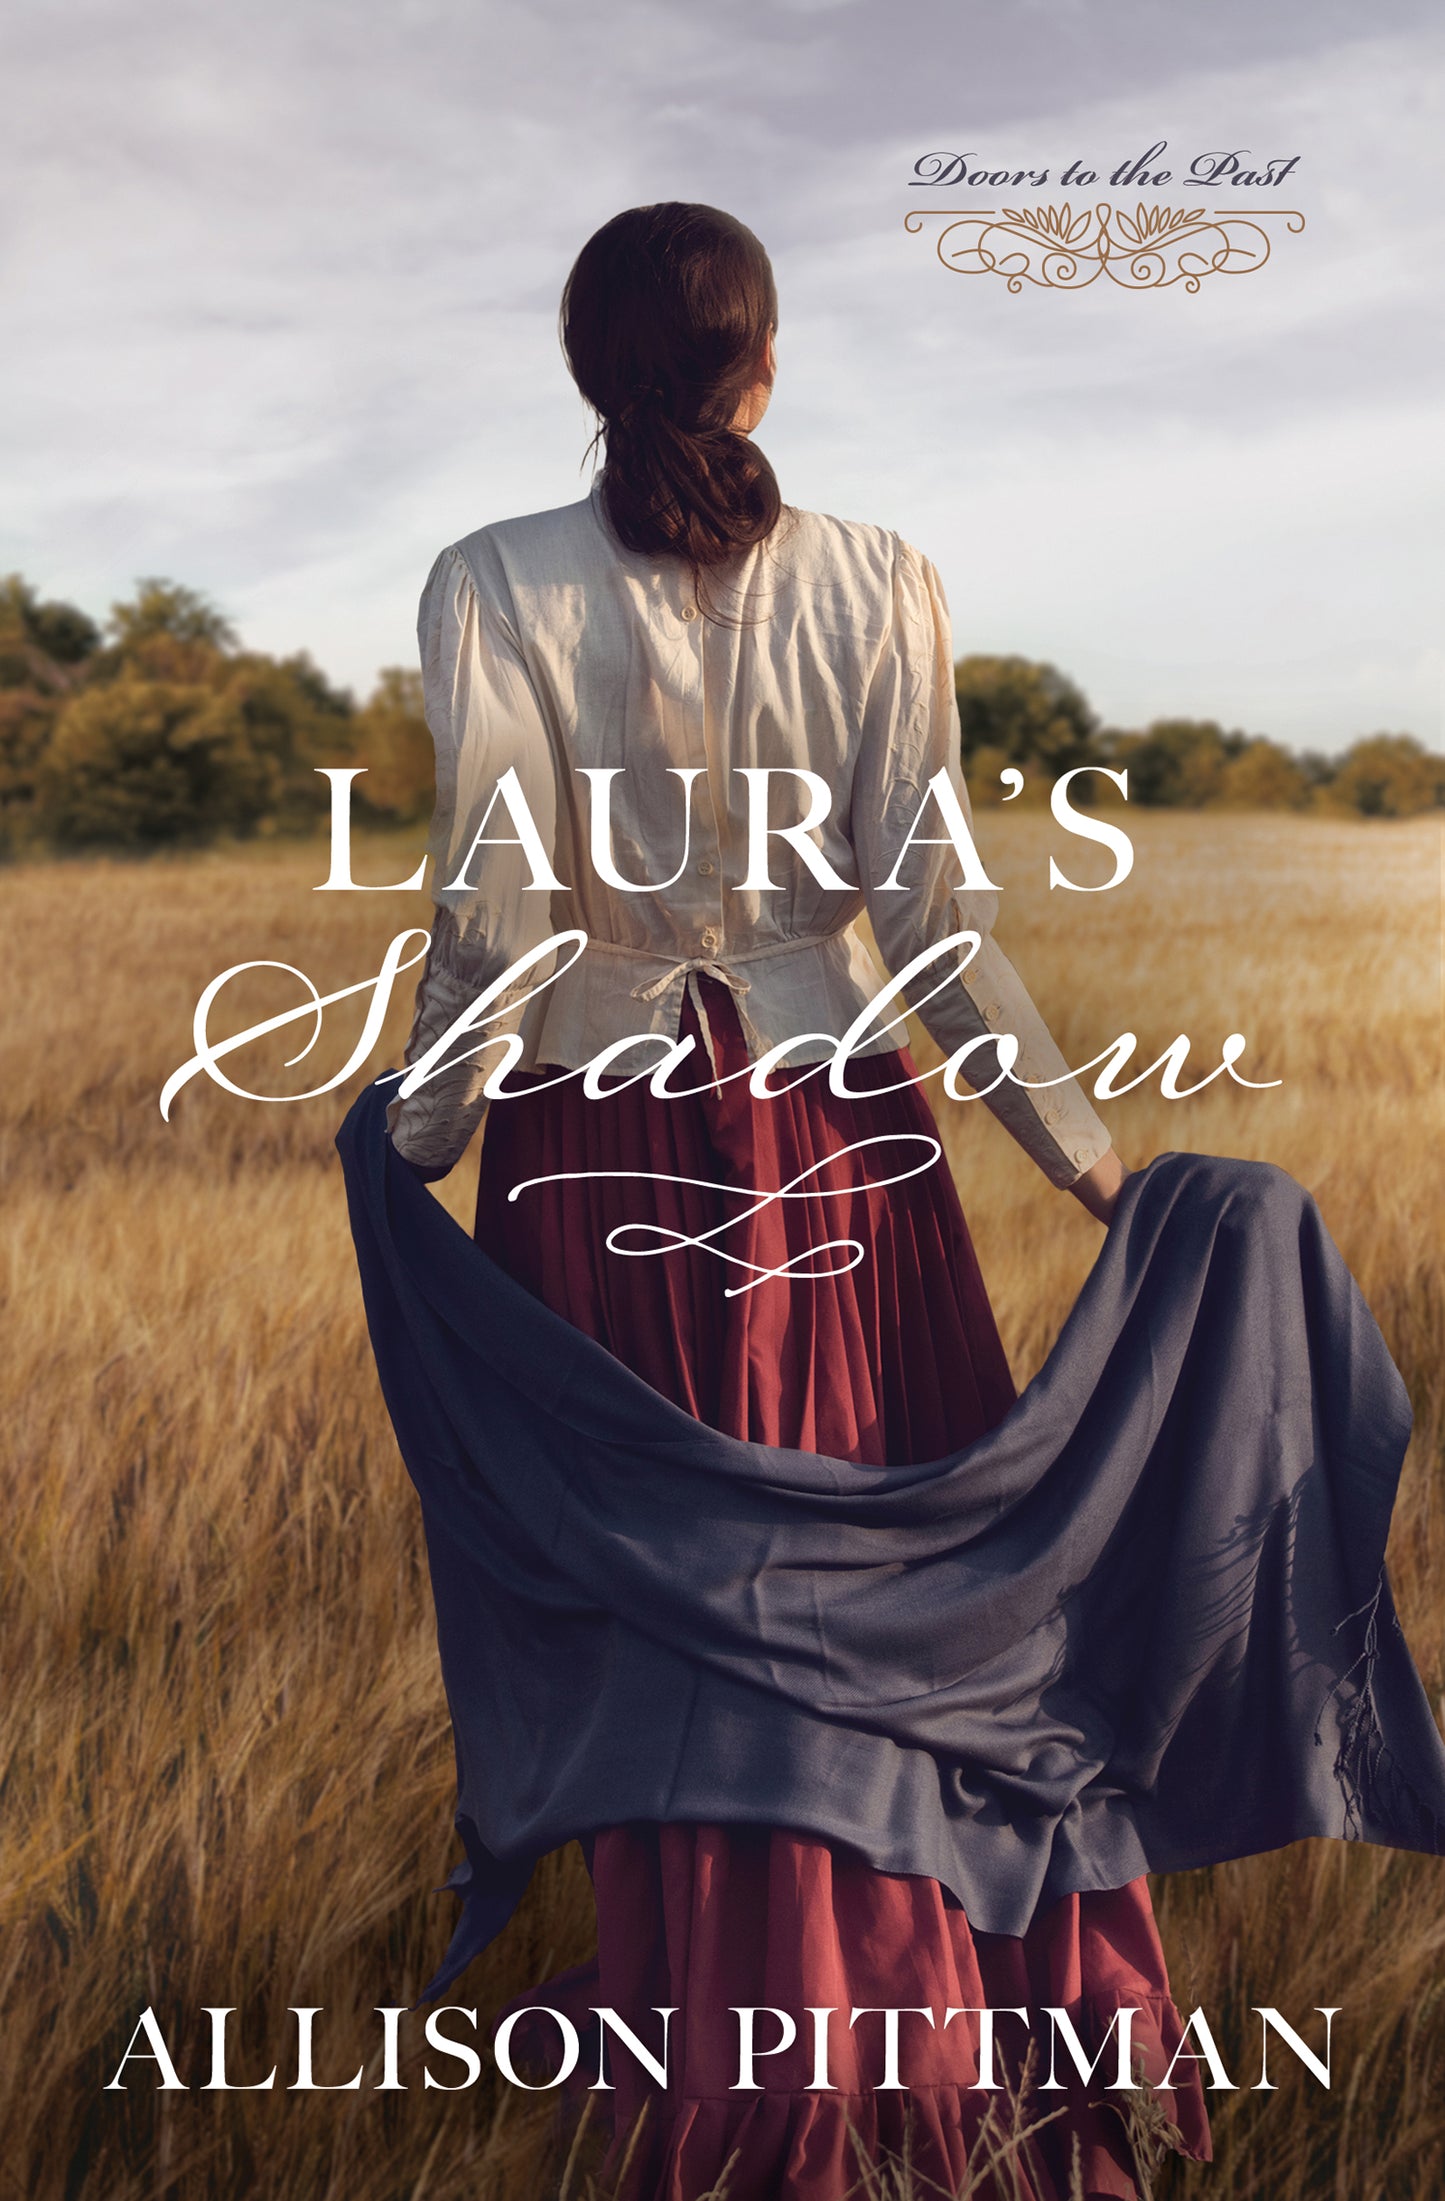 Laura's Shadow - The Christian Gift Company